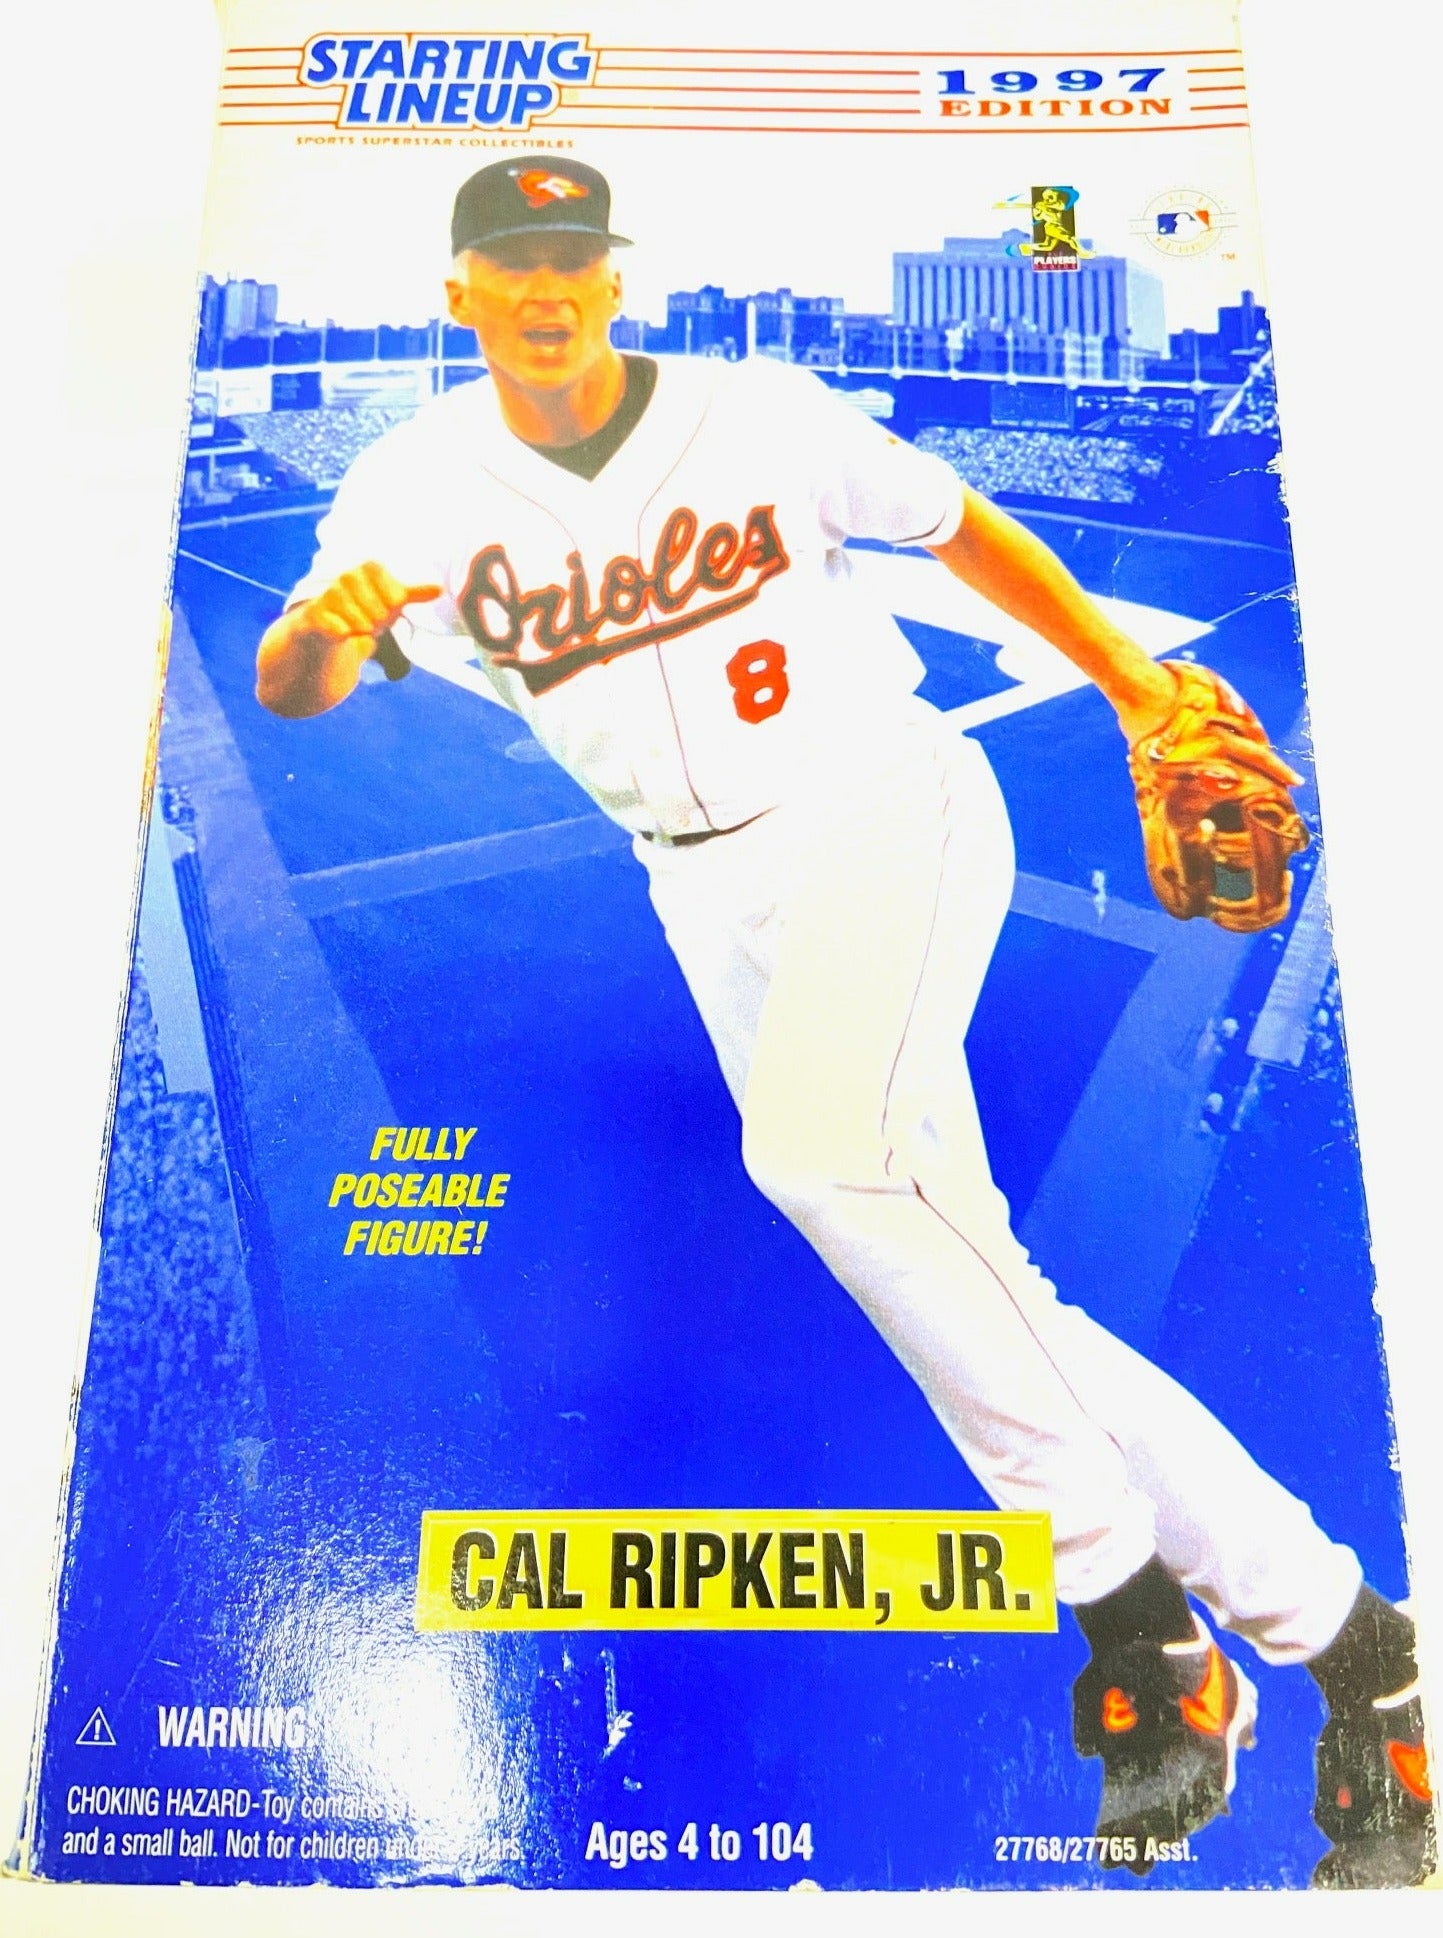 1997 Cal Ripken Jr. Signed Baltimore Orioles Jersey